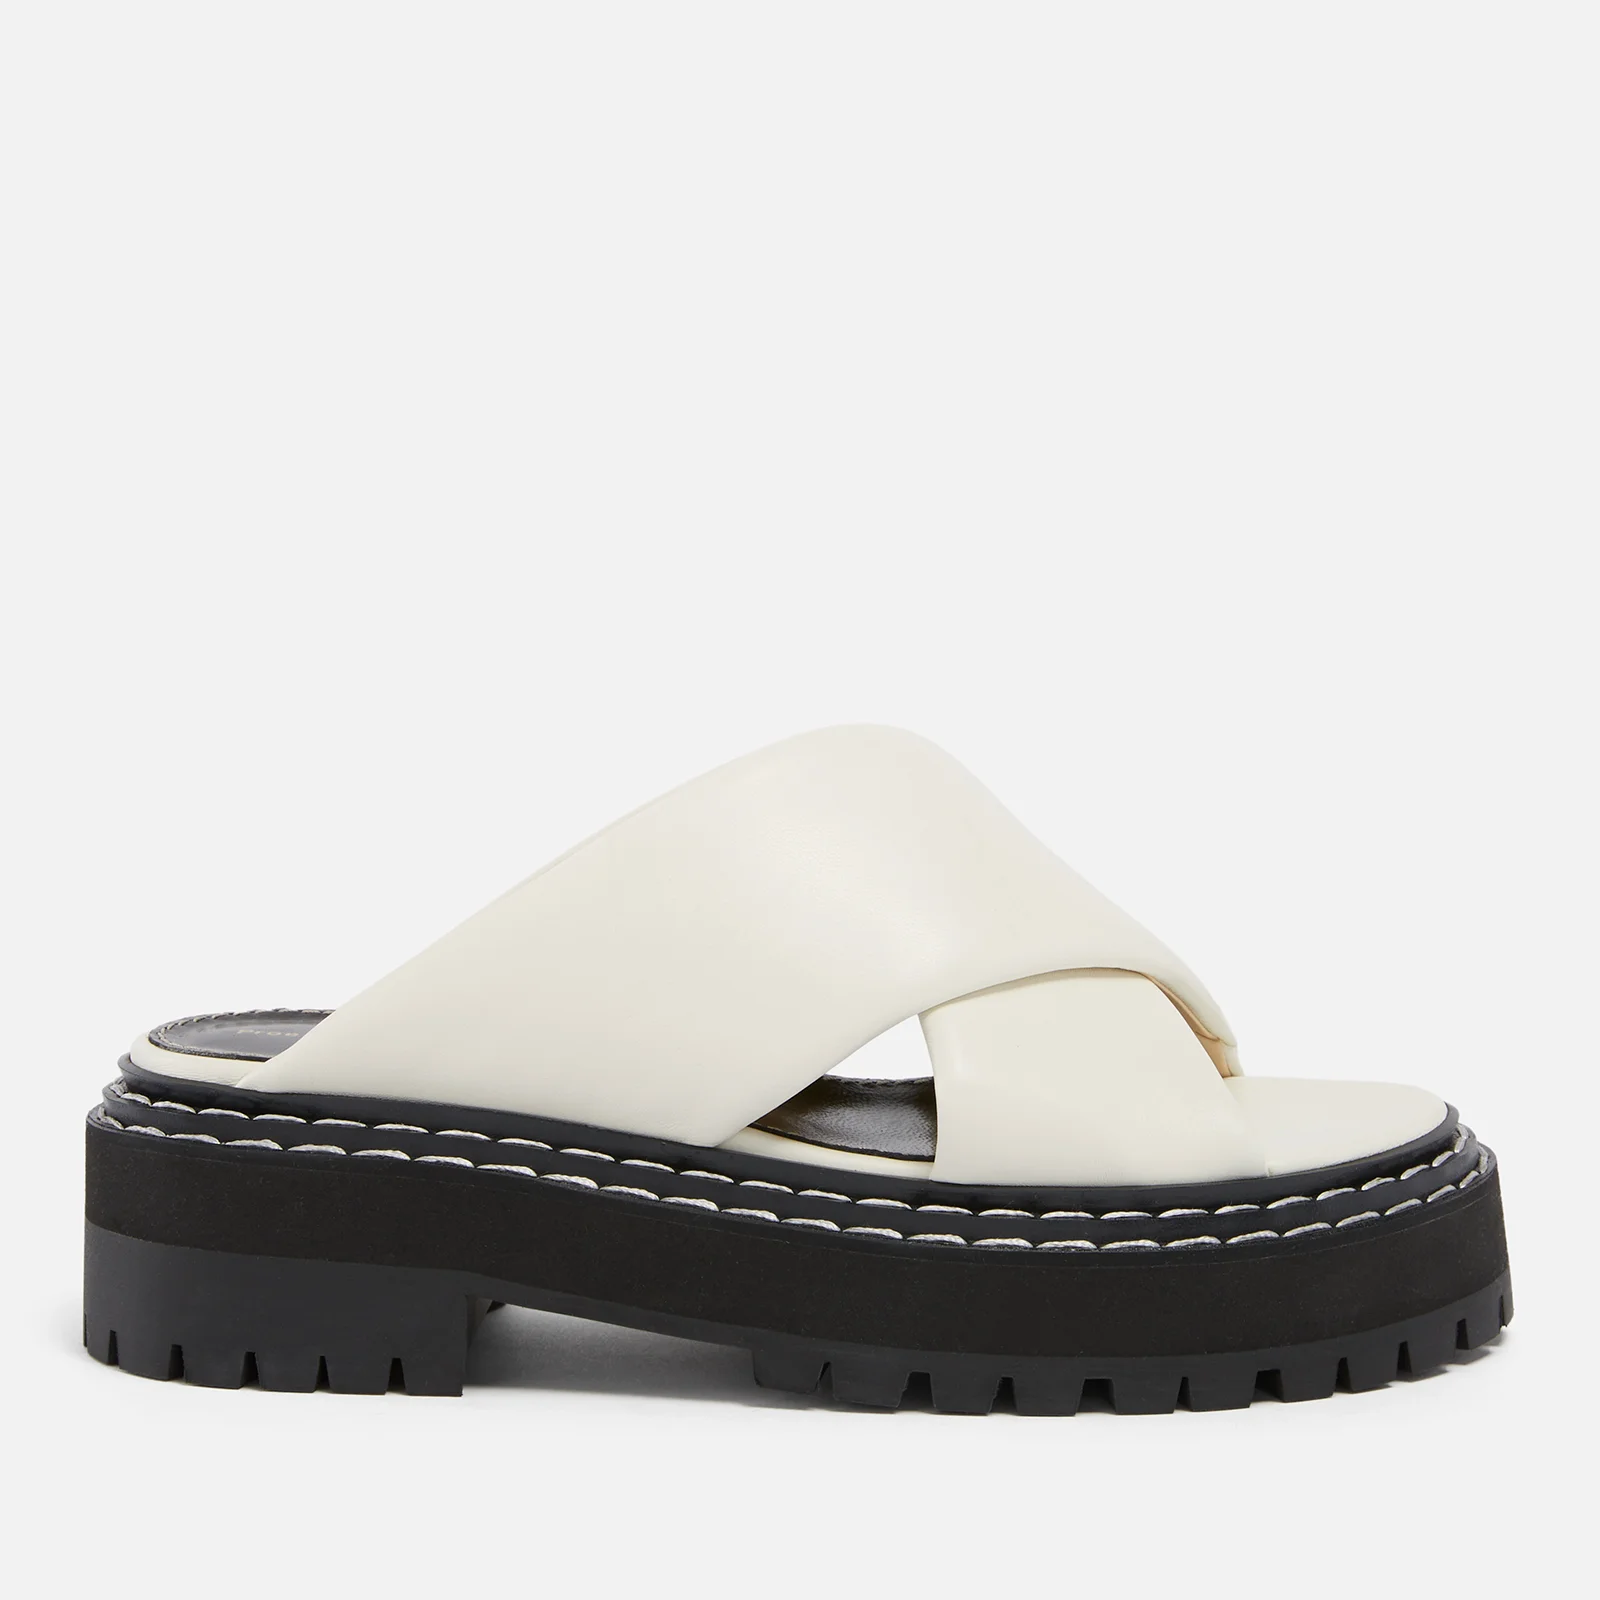 Proenza Schouler Women’s Leather Platform Sandals Image 1